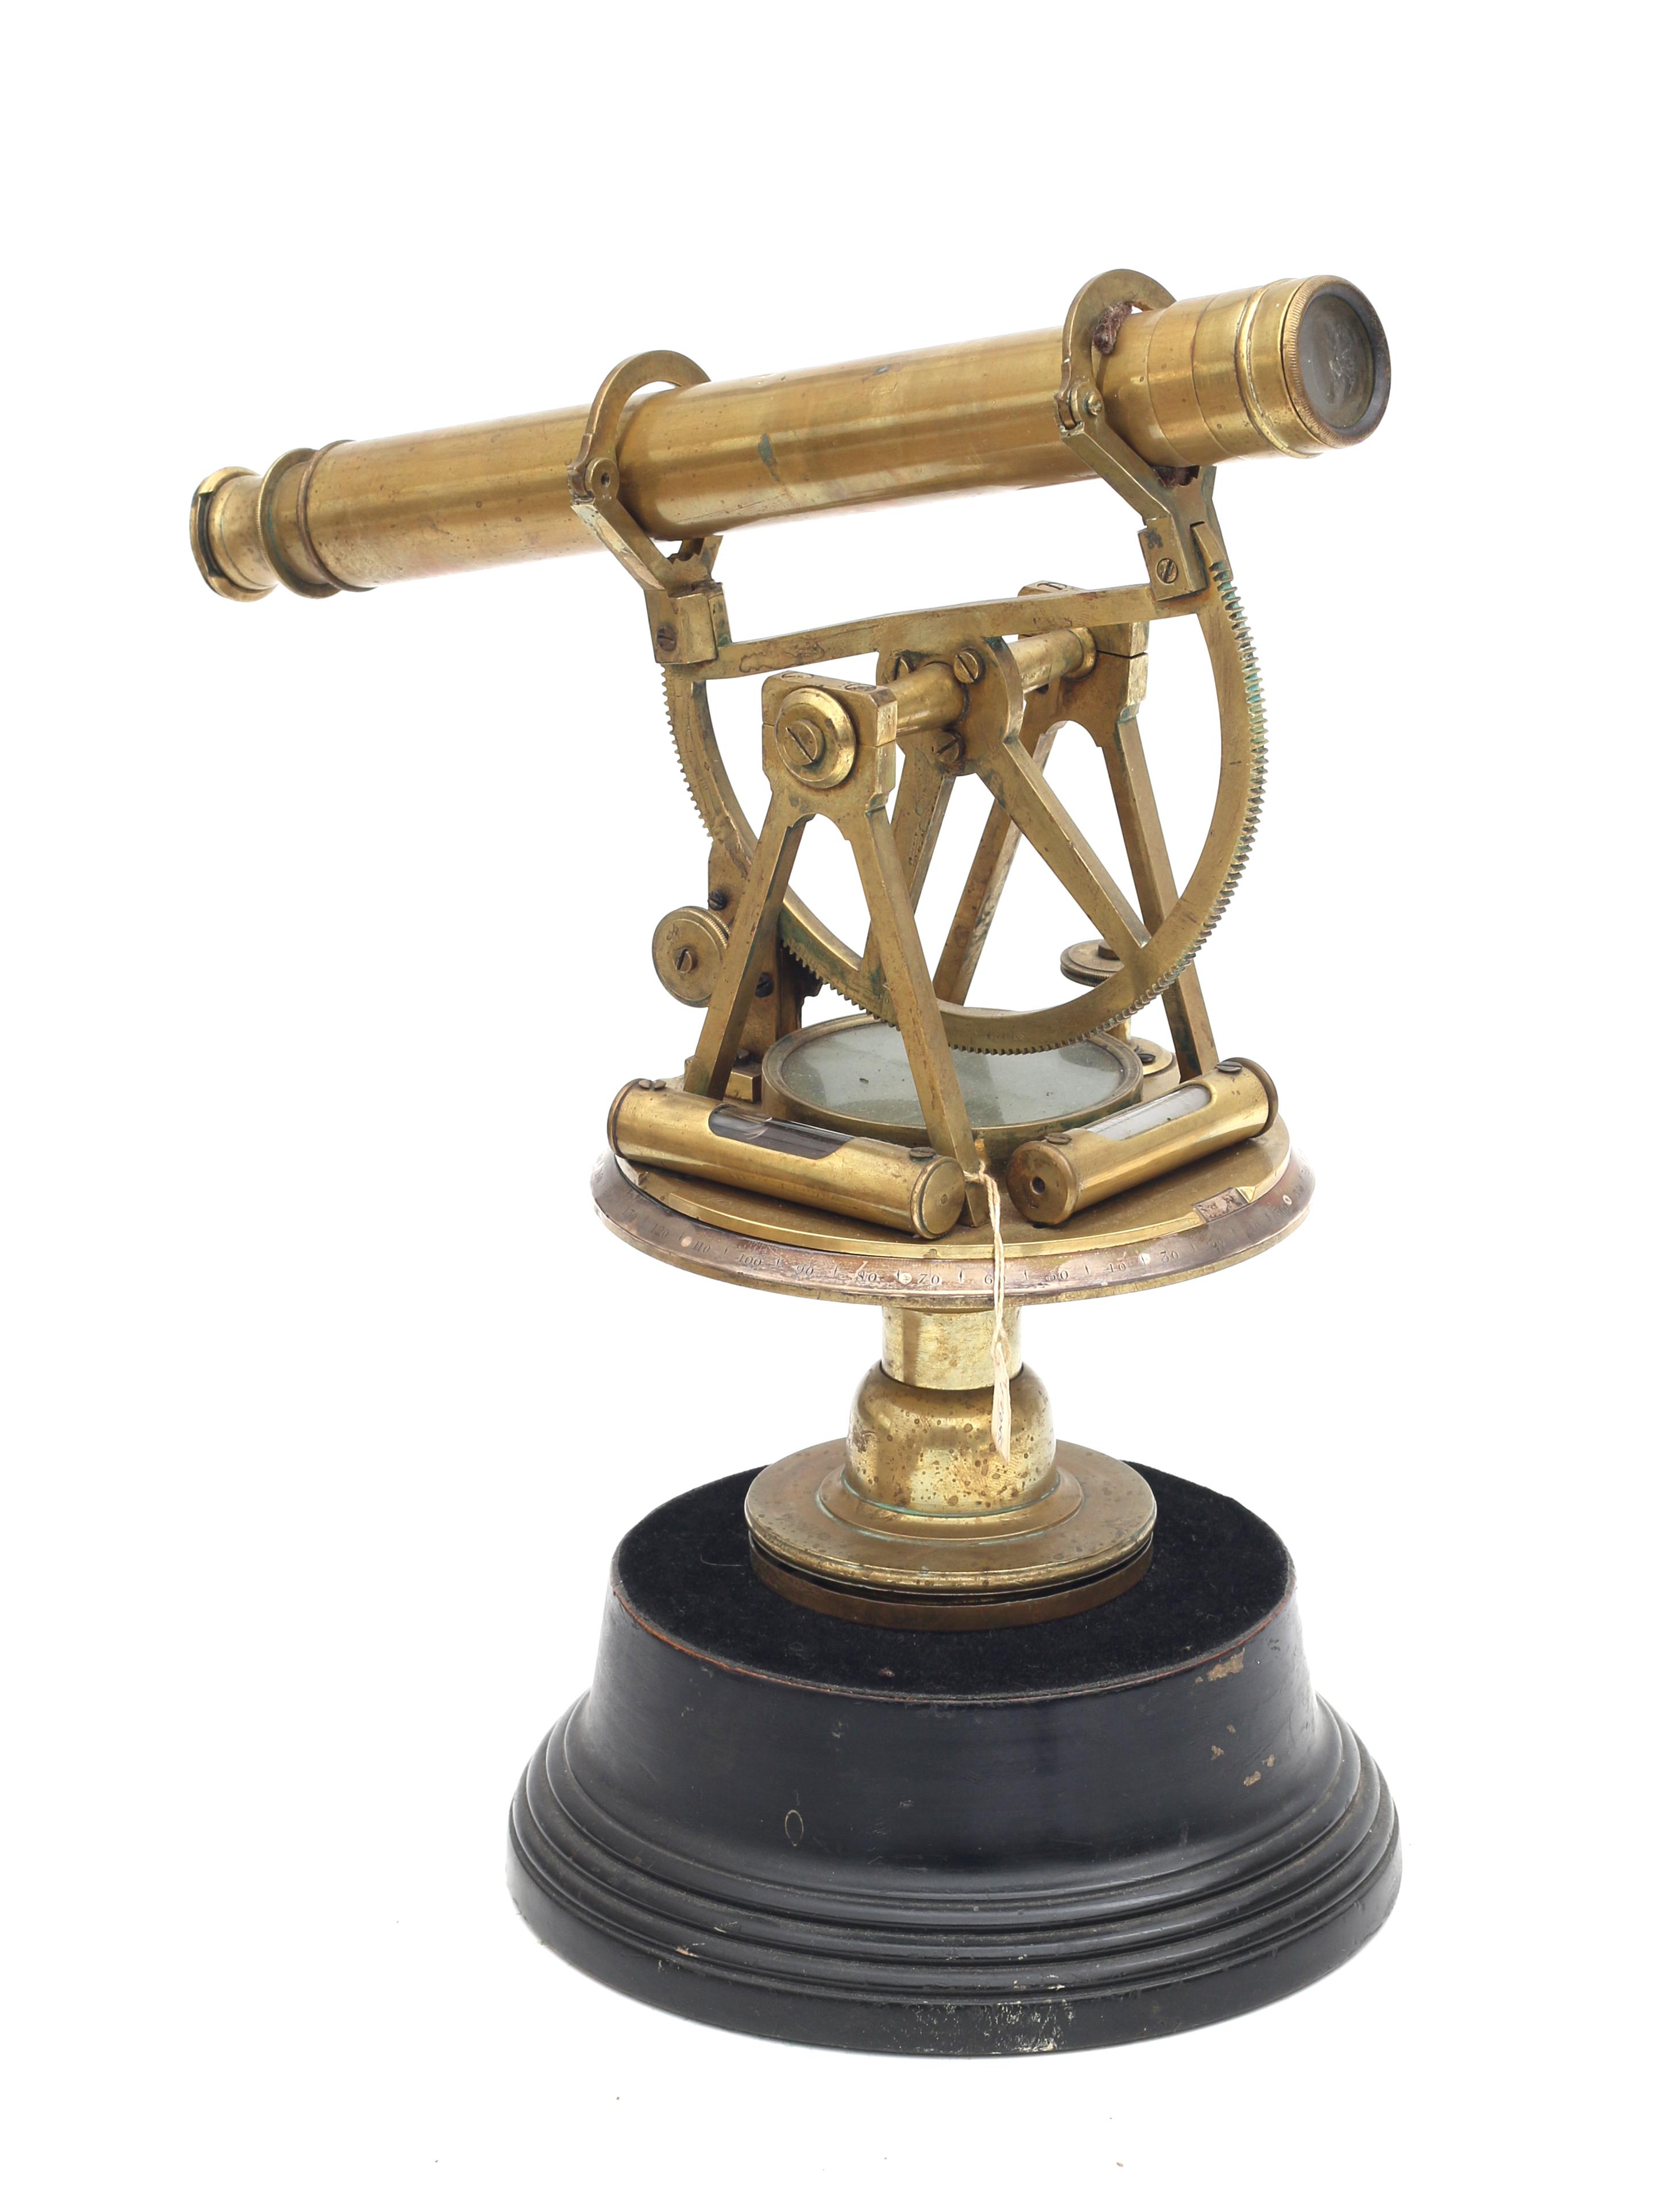 A brass theodolite telescope on wooden base, England, 19th century.